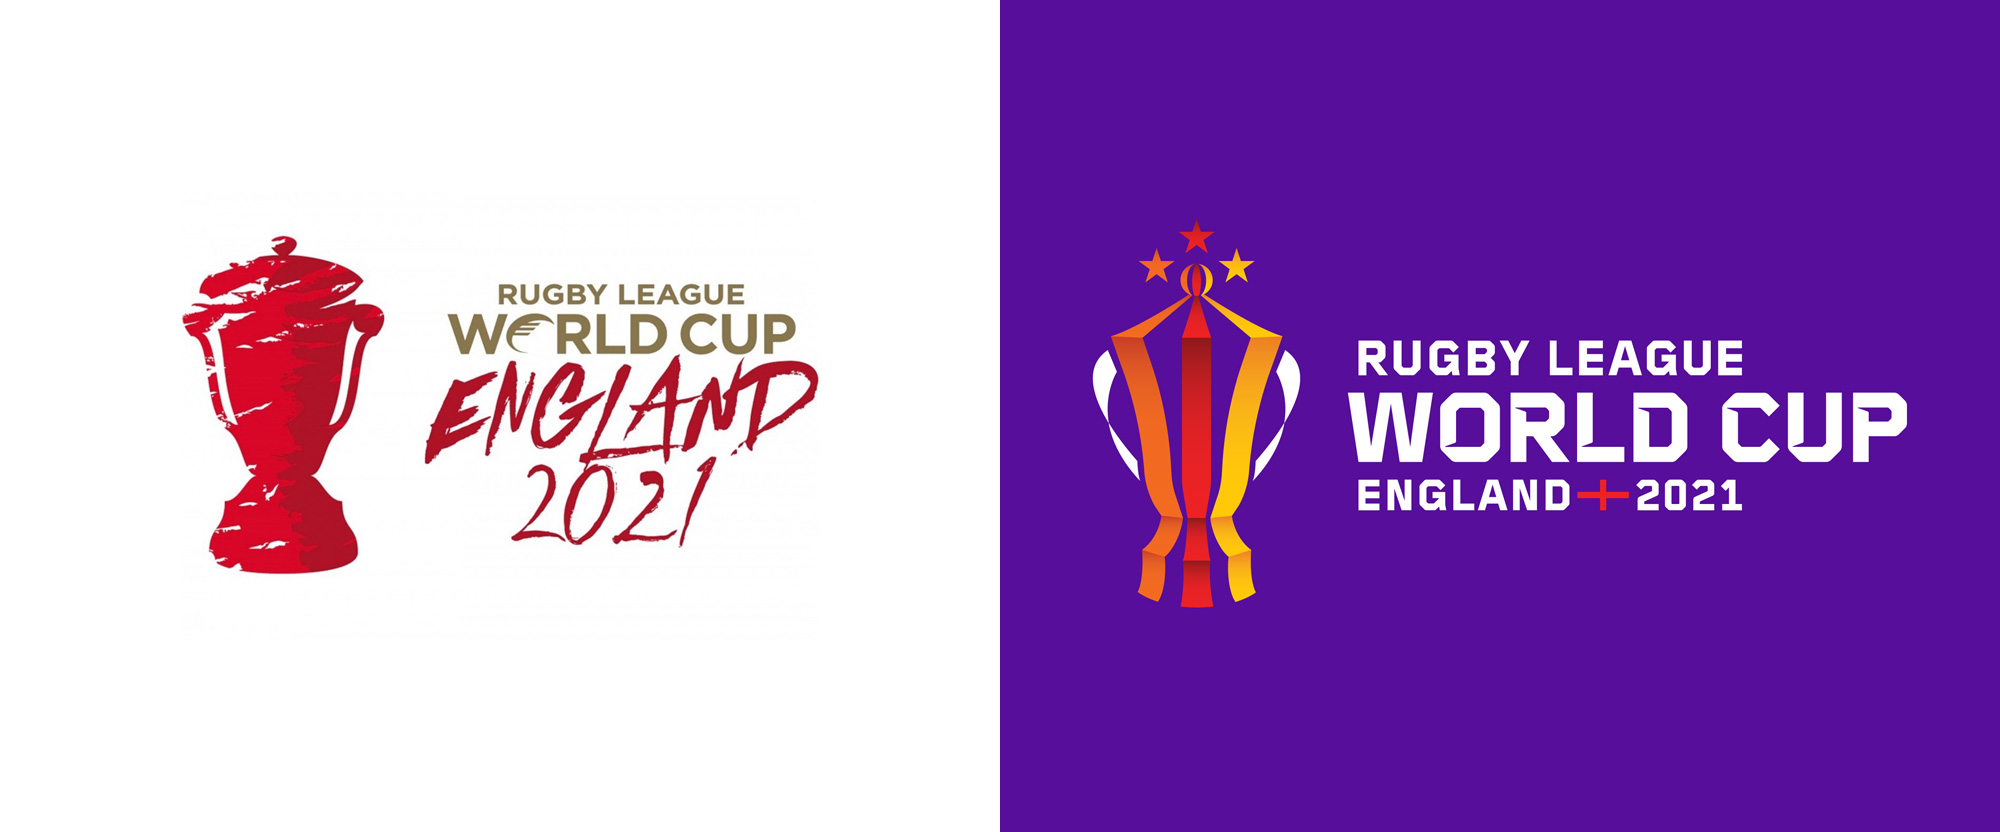 Brand New: New Logo for Qatar 2022 FIFA World Cup by UnlockBrands